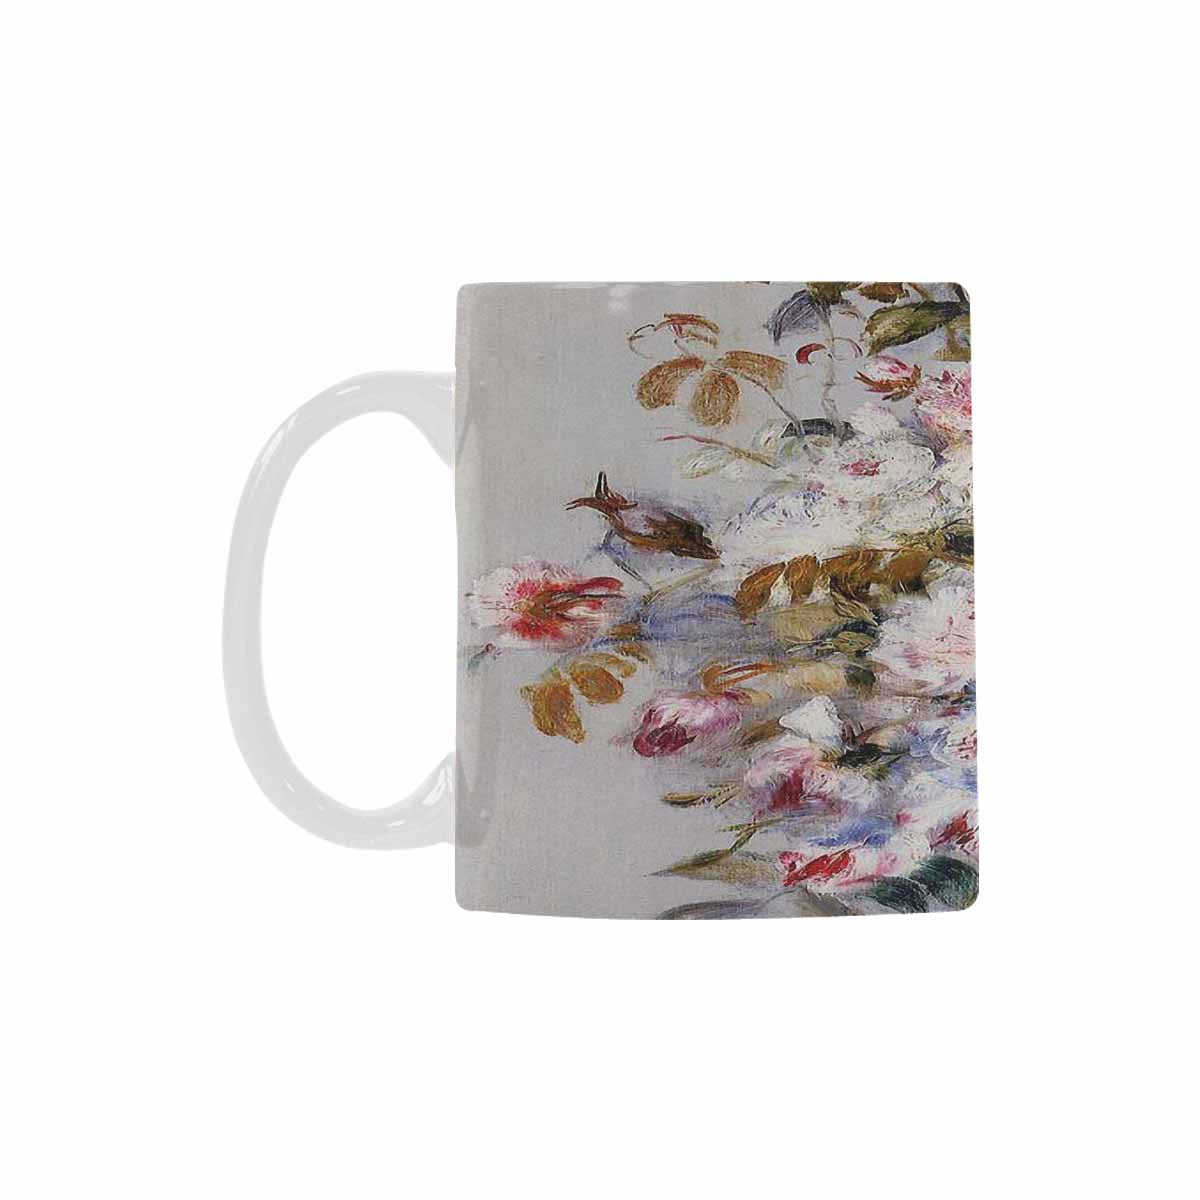 Vintage floral coffee mug or tea cup, Design 12